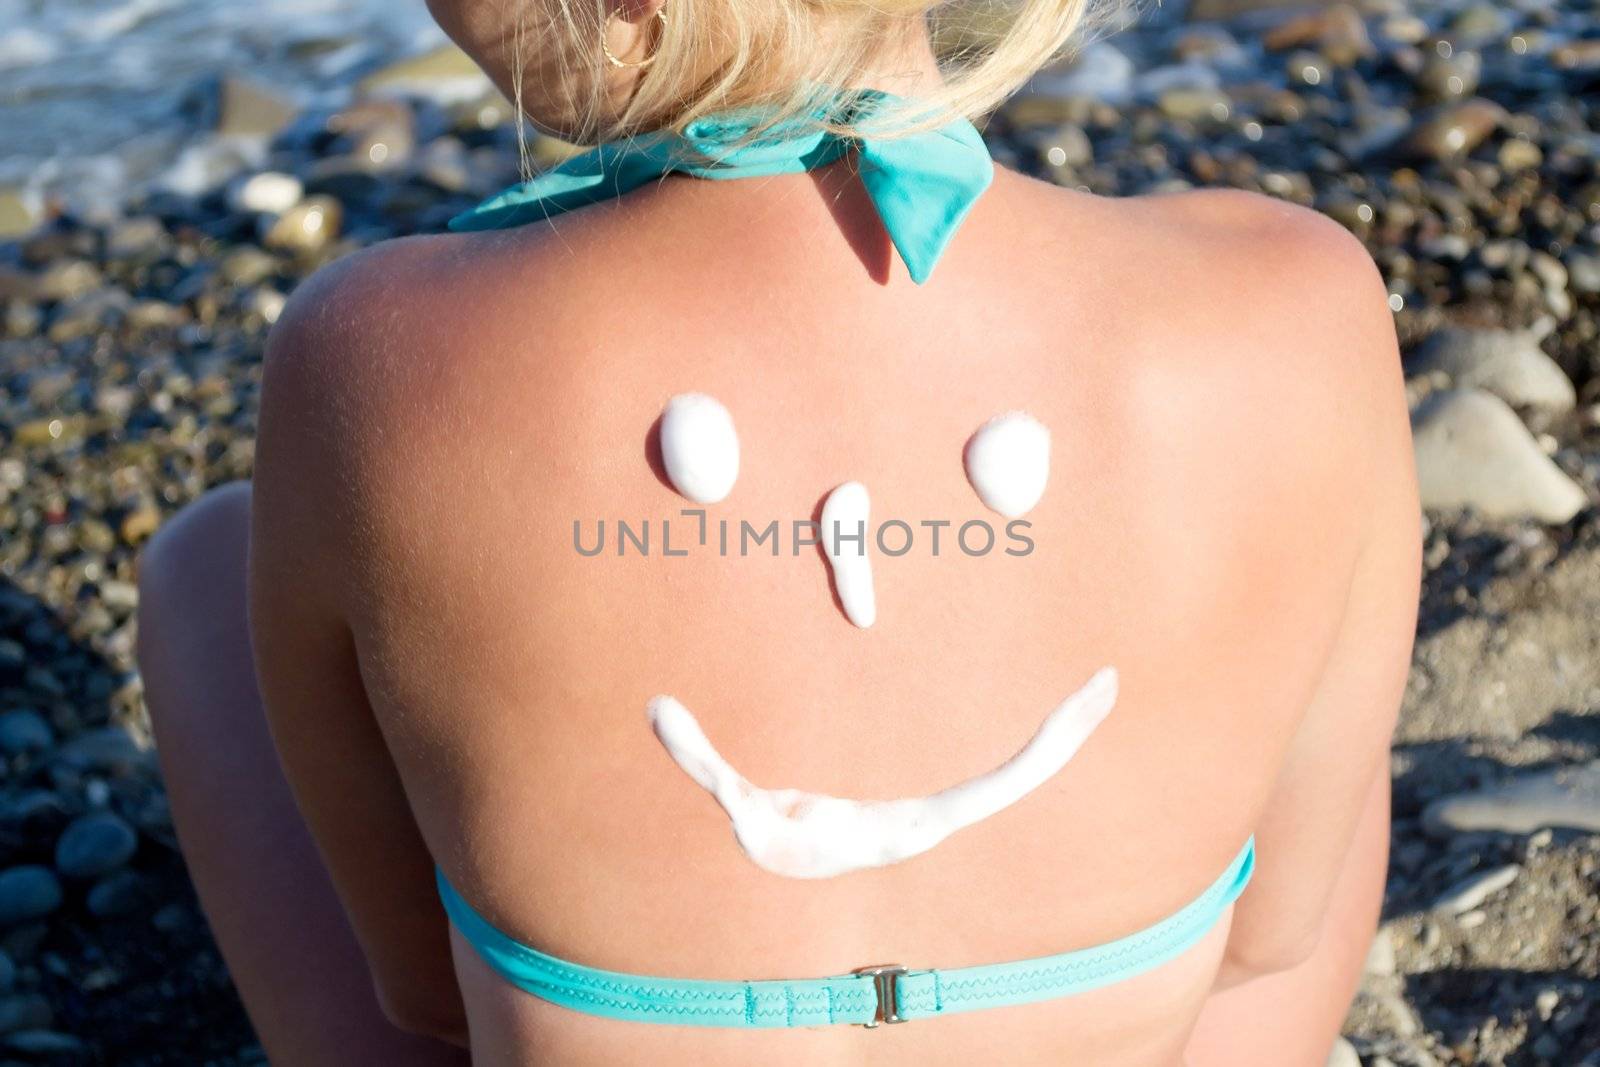 sun protection cream on her back by gurin_oleksandr